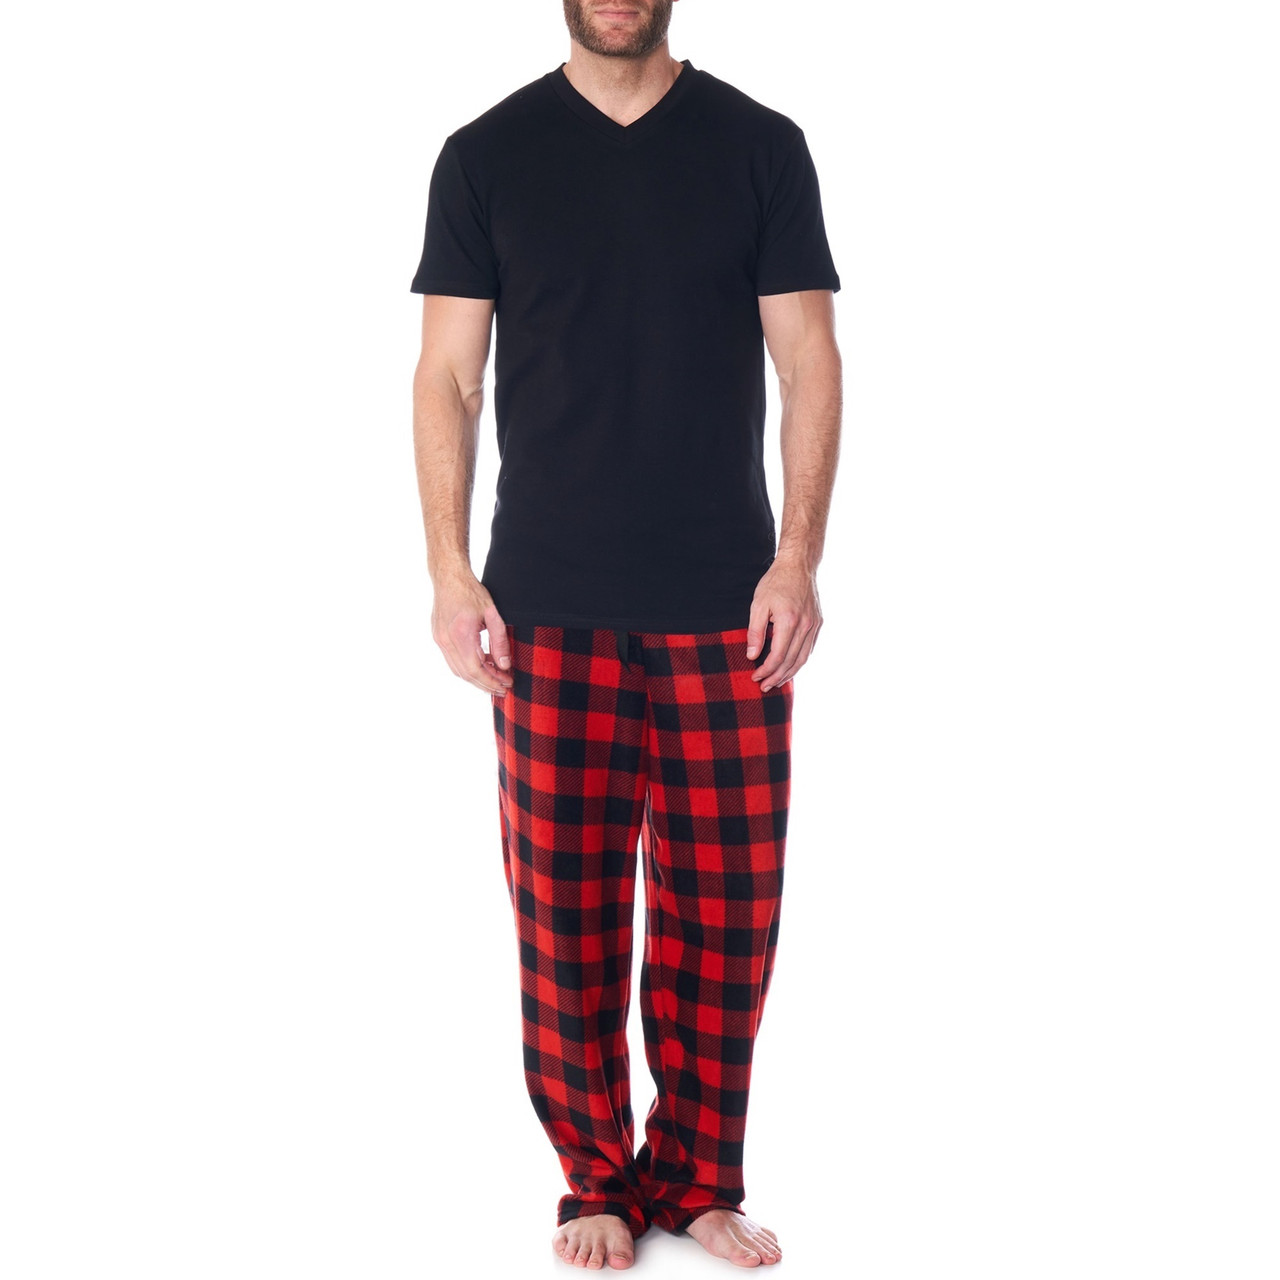 Mens Cotton Red & Black Plaid Pajama Set